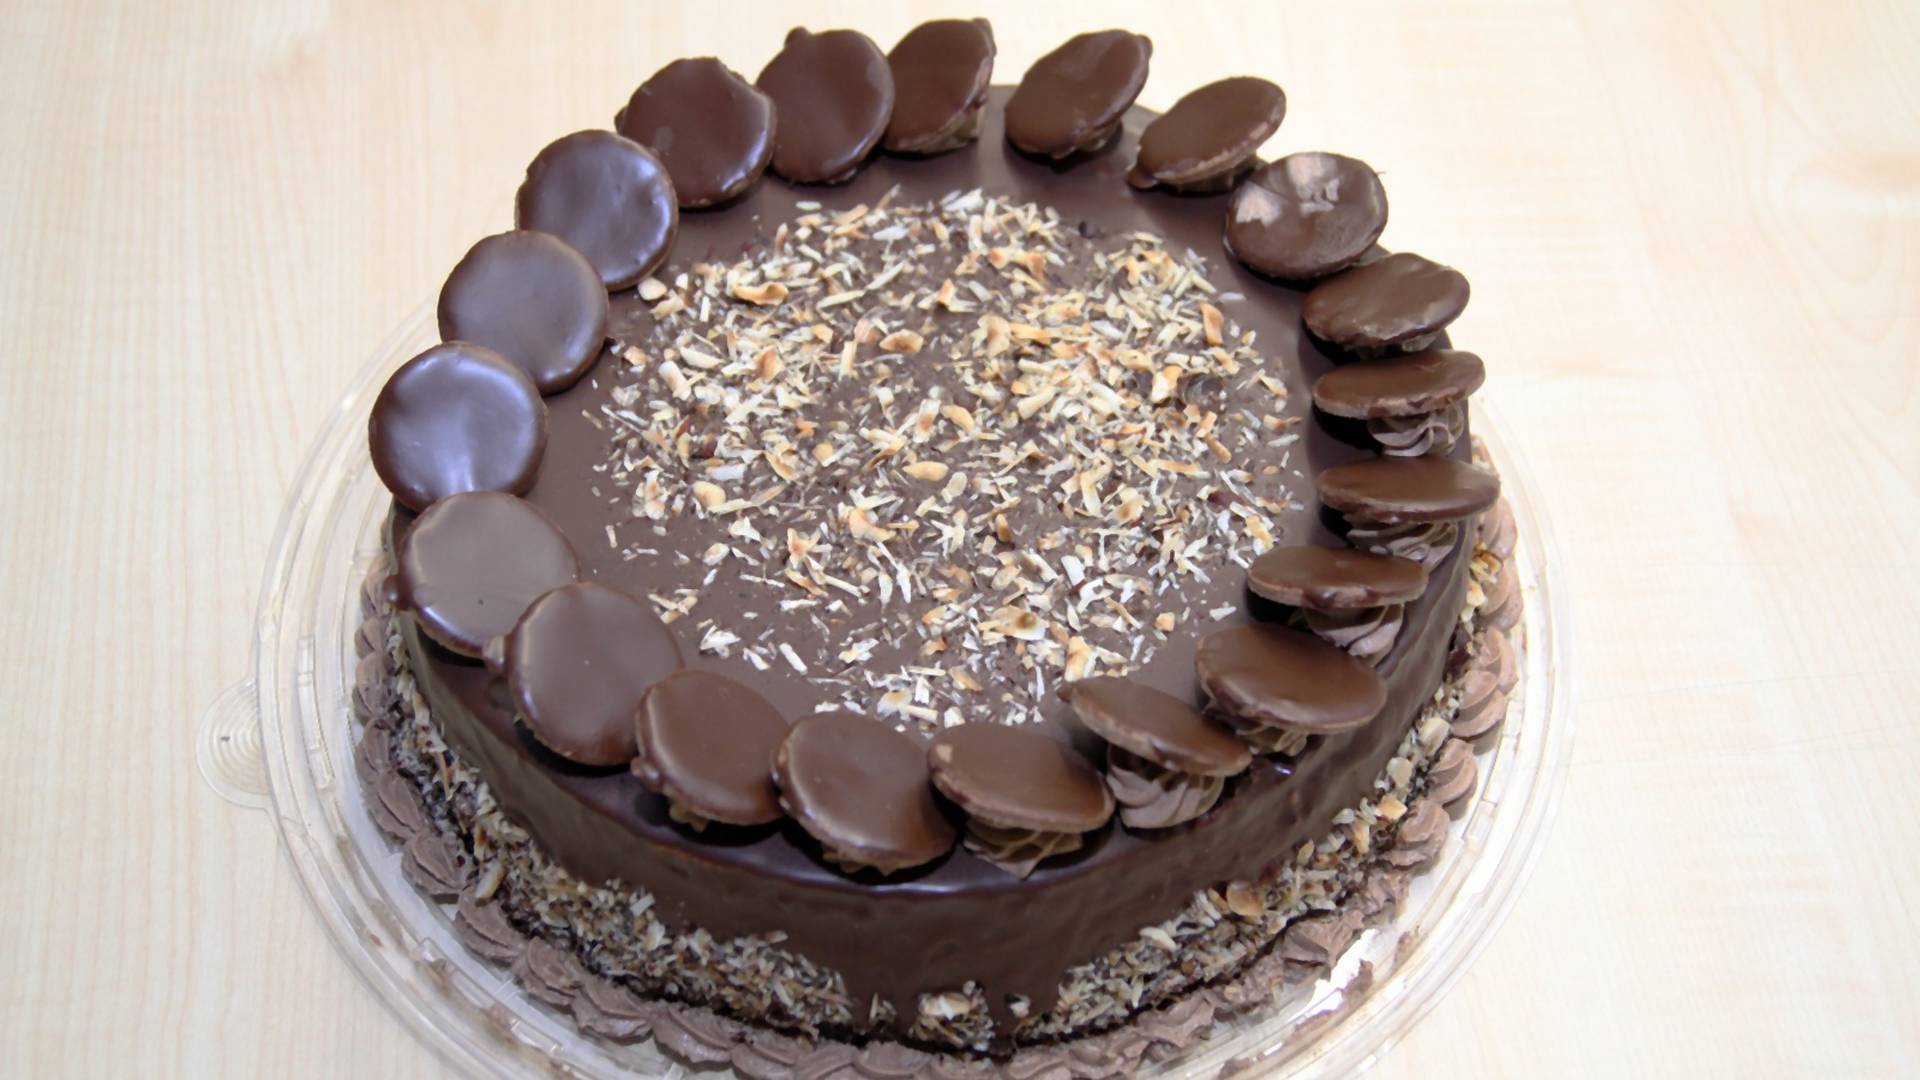 Omiljena torta kraljice Elizabete se pravi za 10 minuta i pravo je čokoladno zadovoljstvo